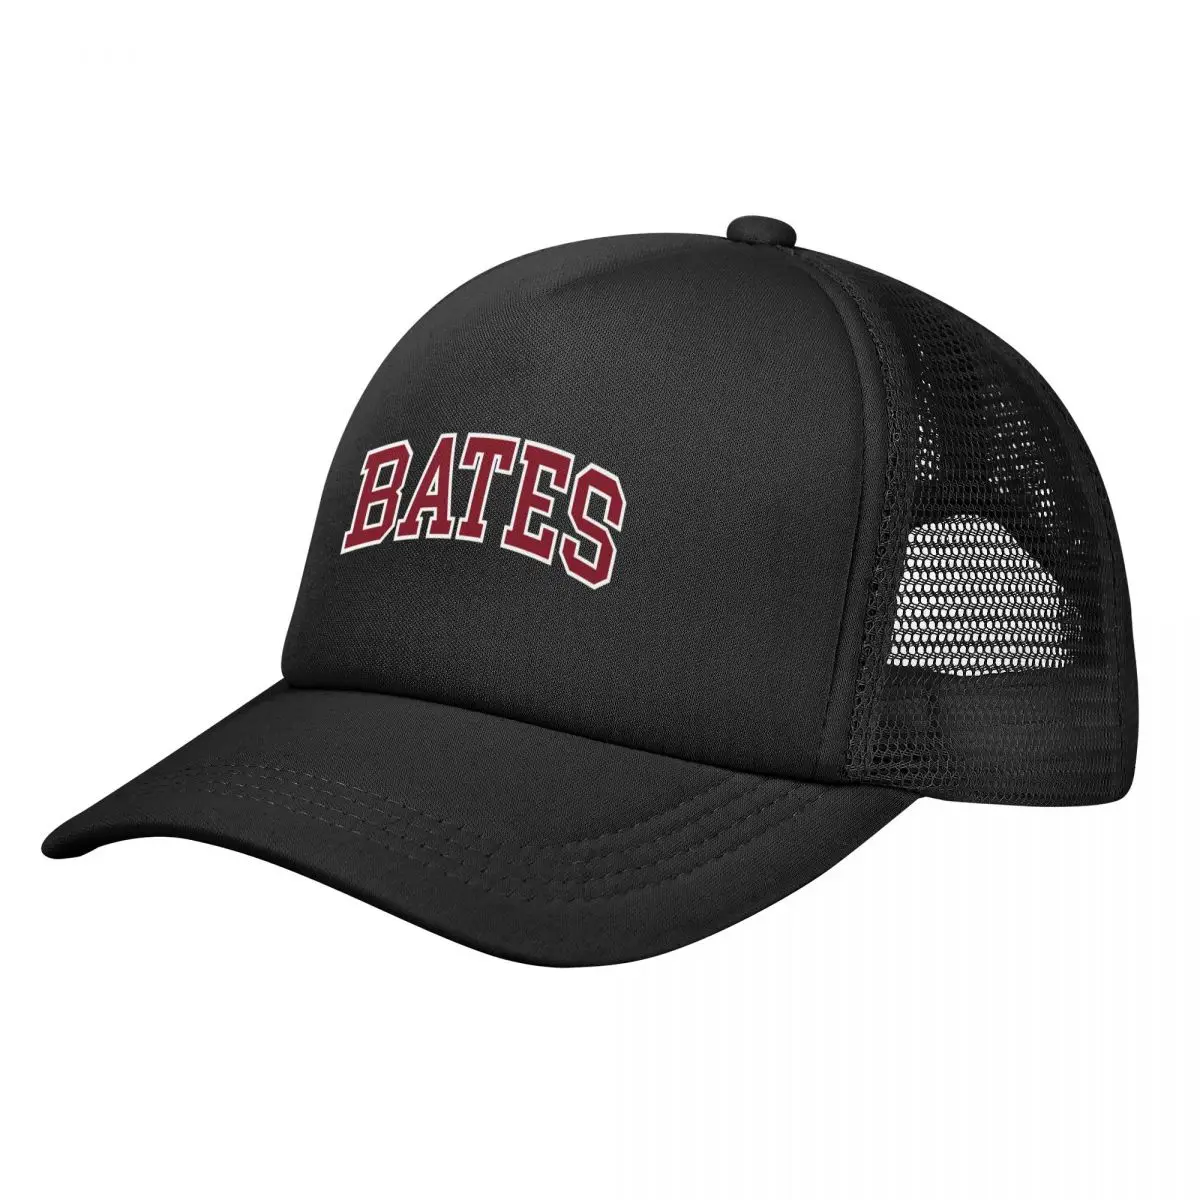 

bates - college font Baseball Cap New In Hat Hat Luxury Brand Hat Baseball Cap Women's Hats For The Sun Men's